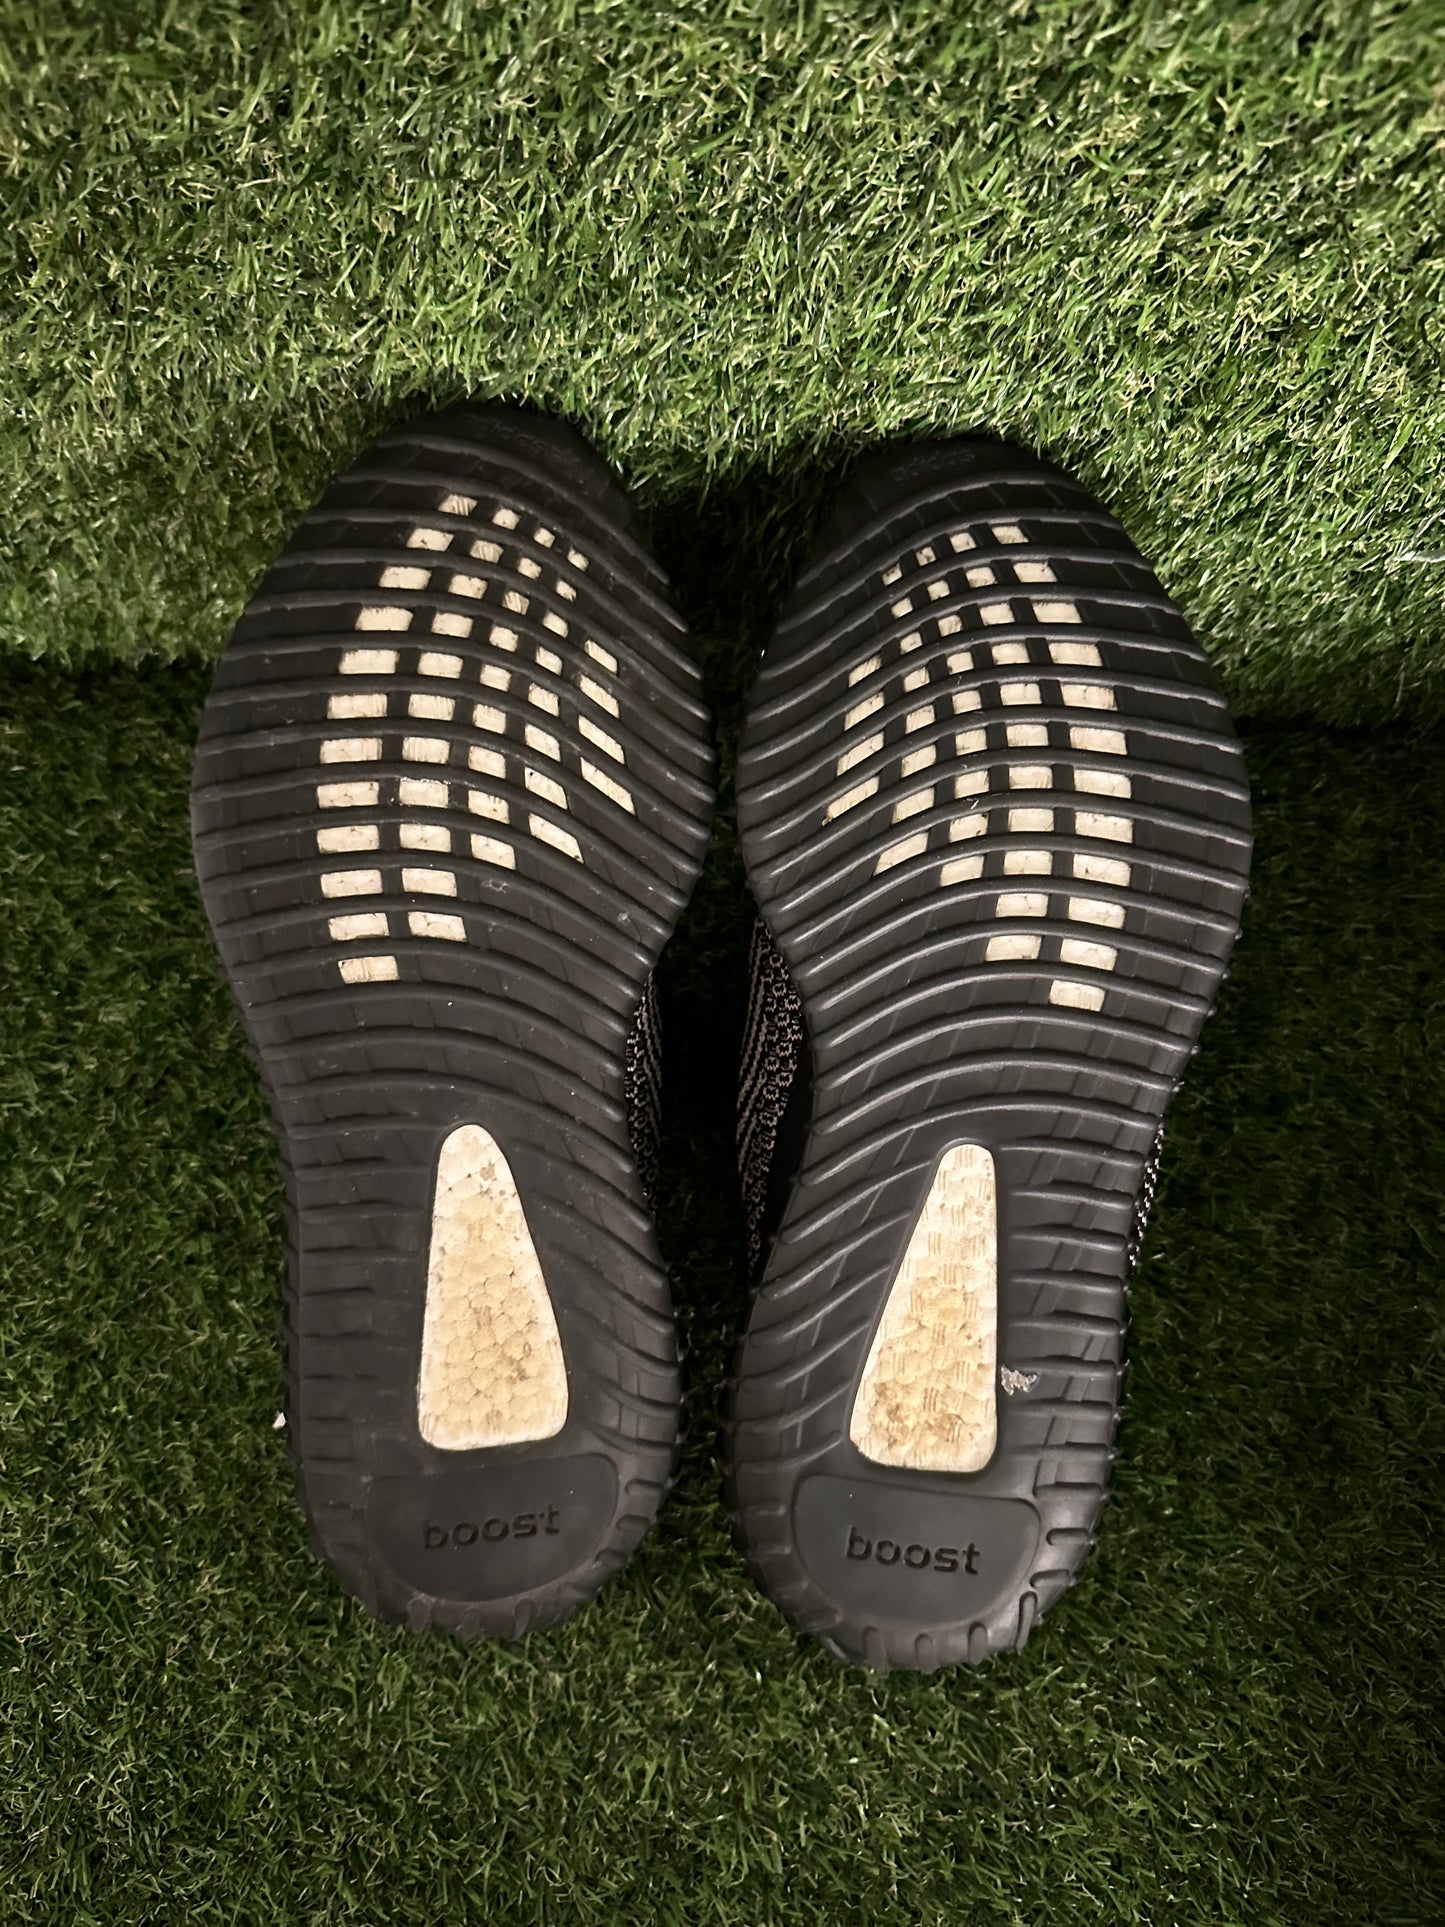 Adidas Yeezy Boost 350 V2 Yecheil (Non-Reflective)